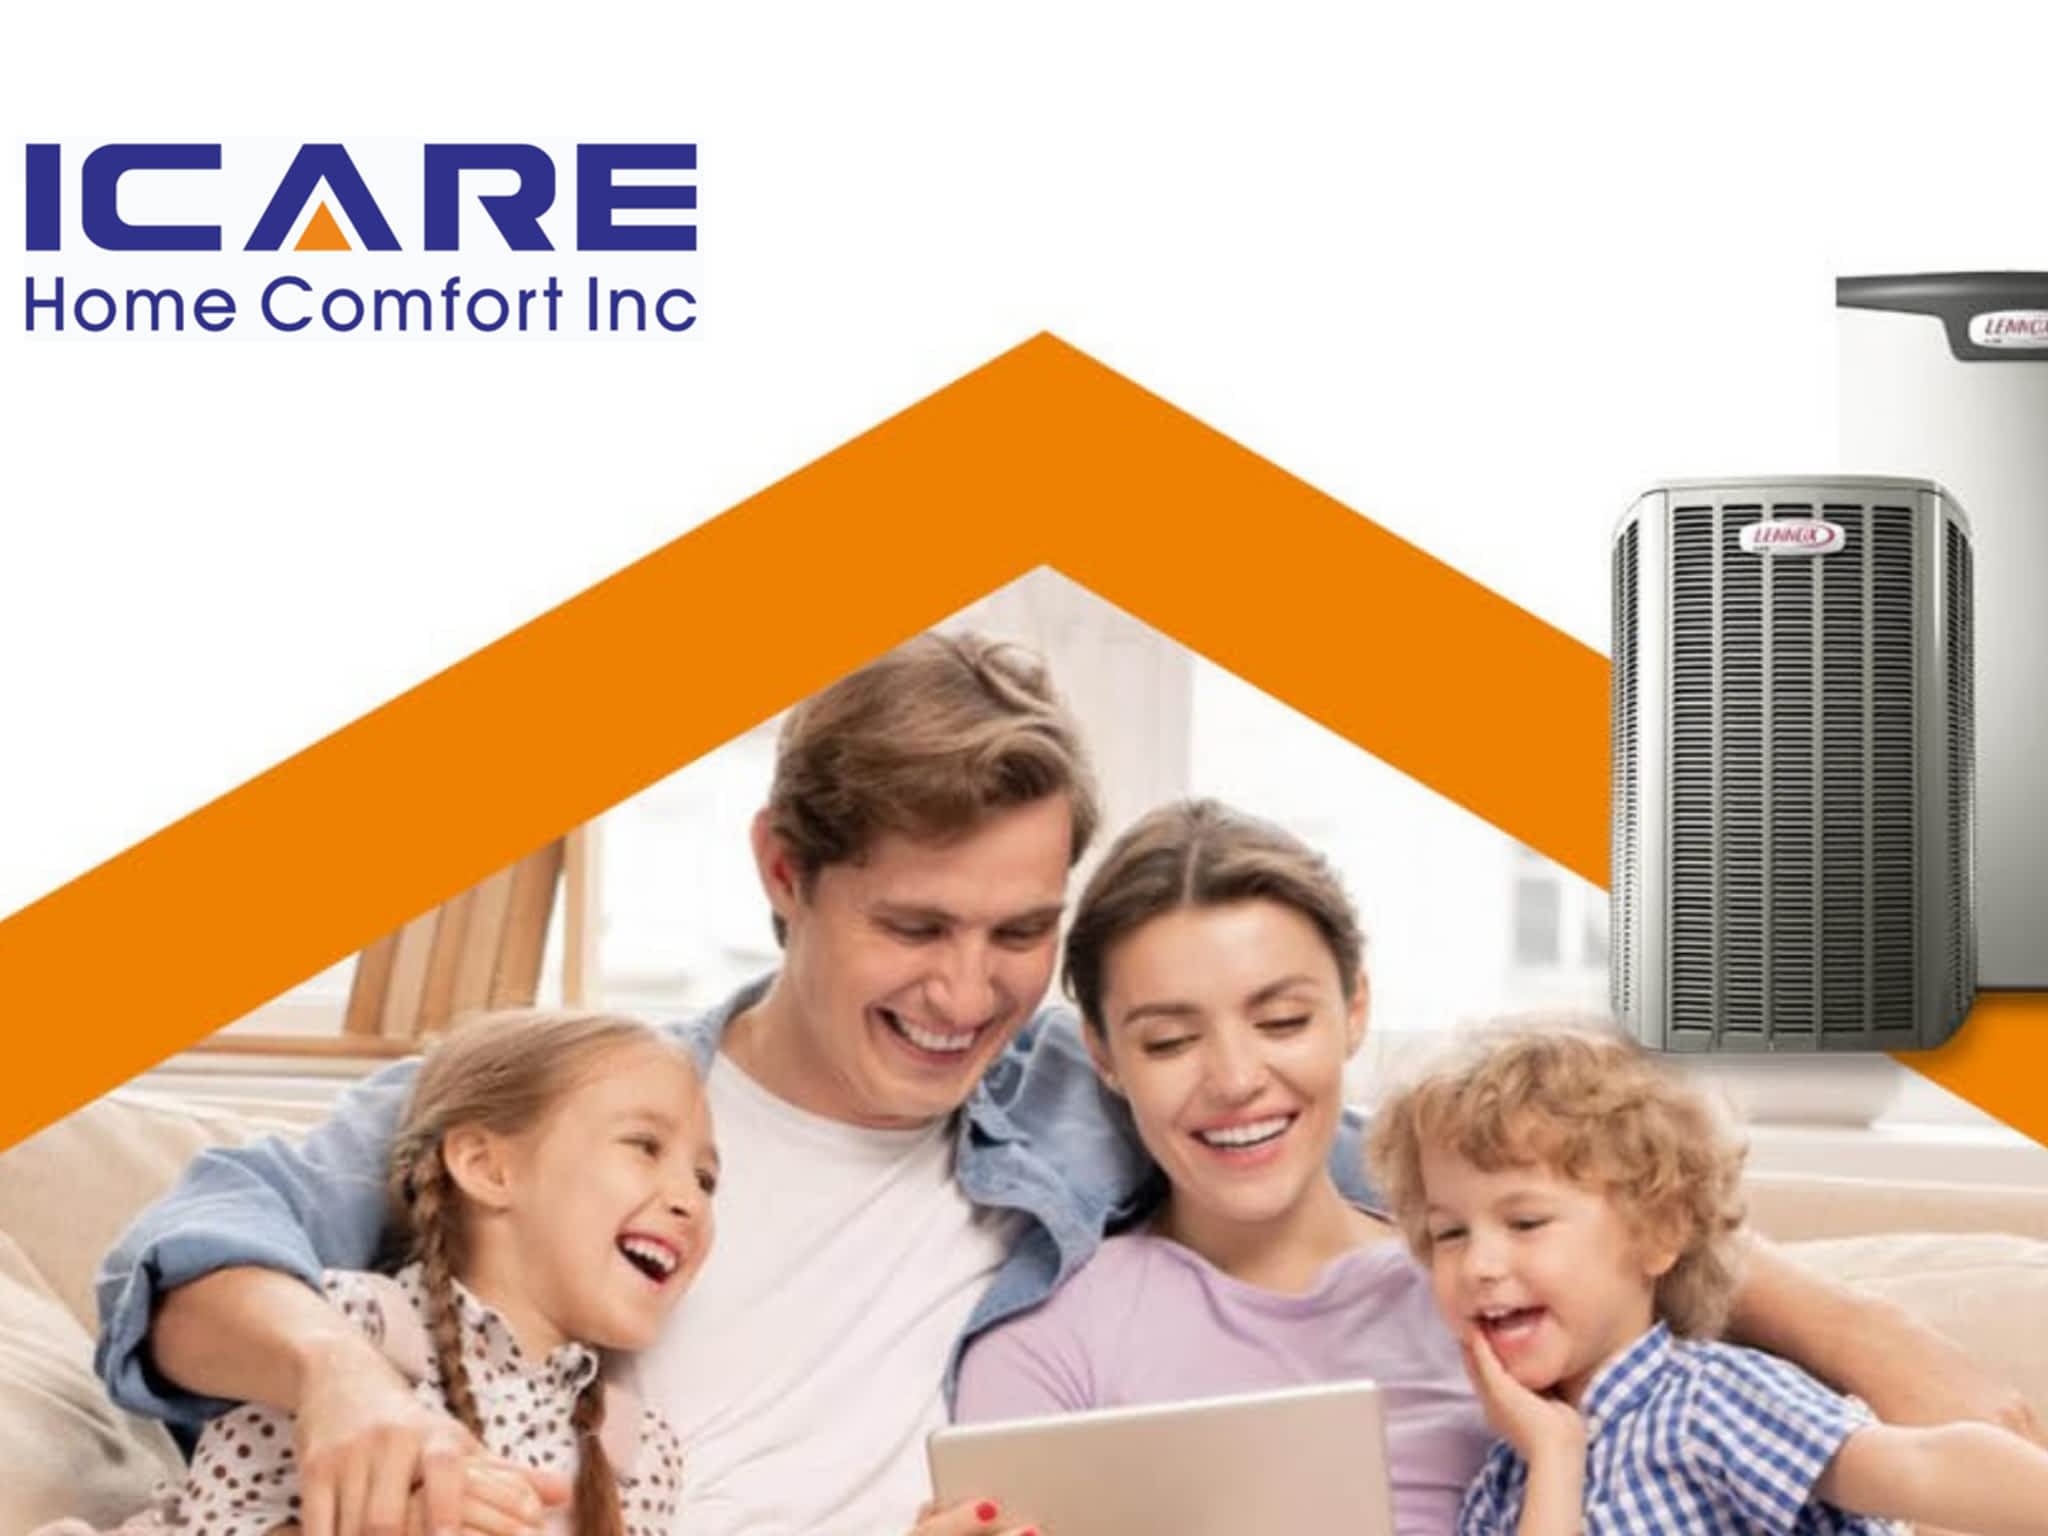 photo Icare Home Comfort Inc